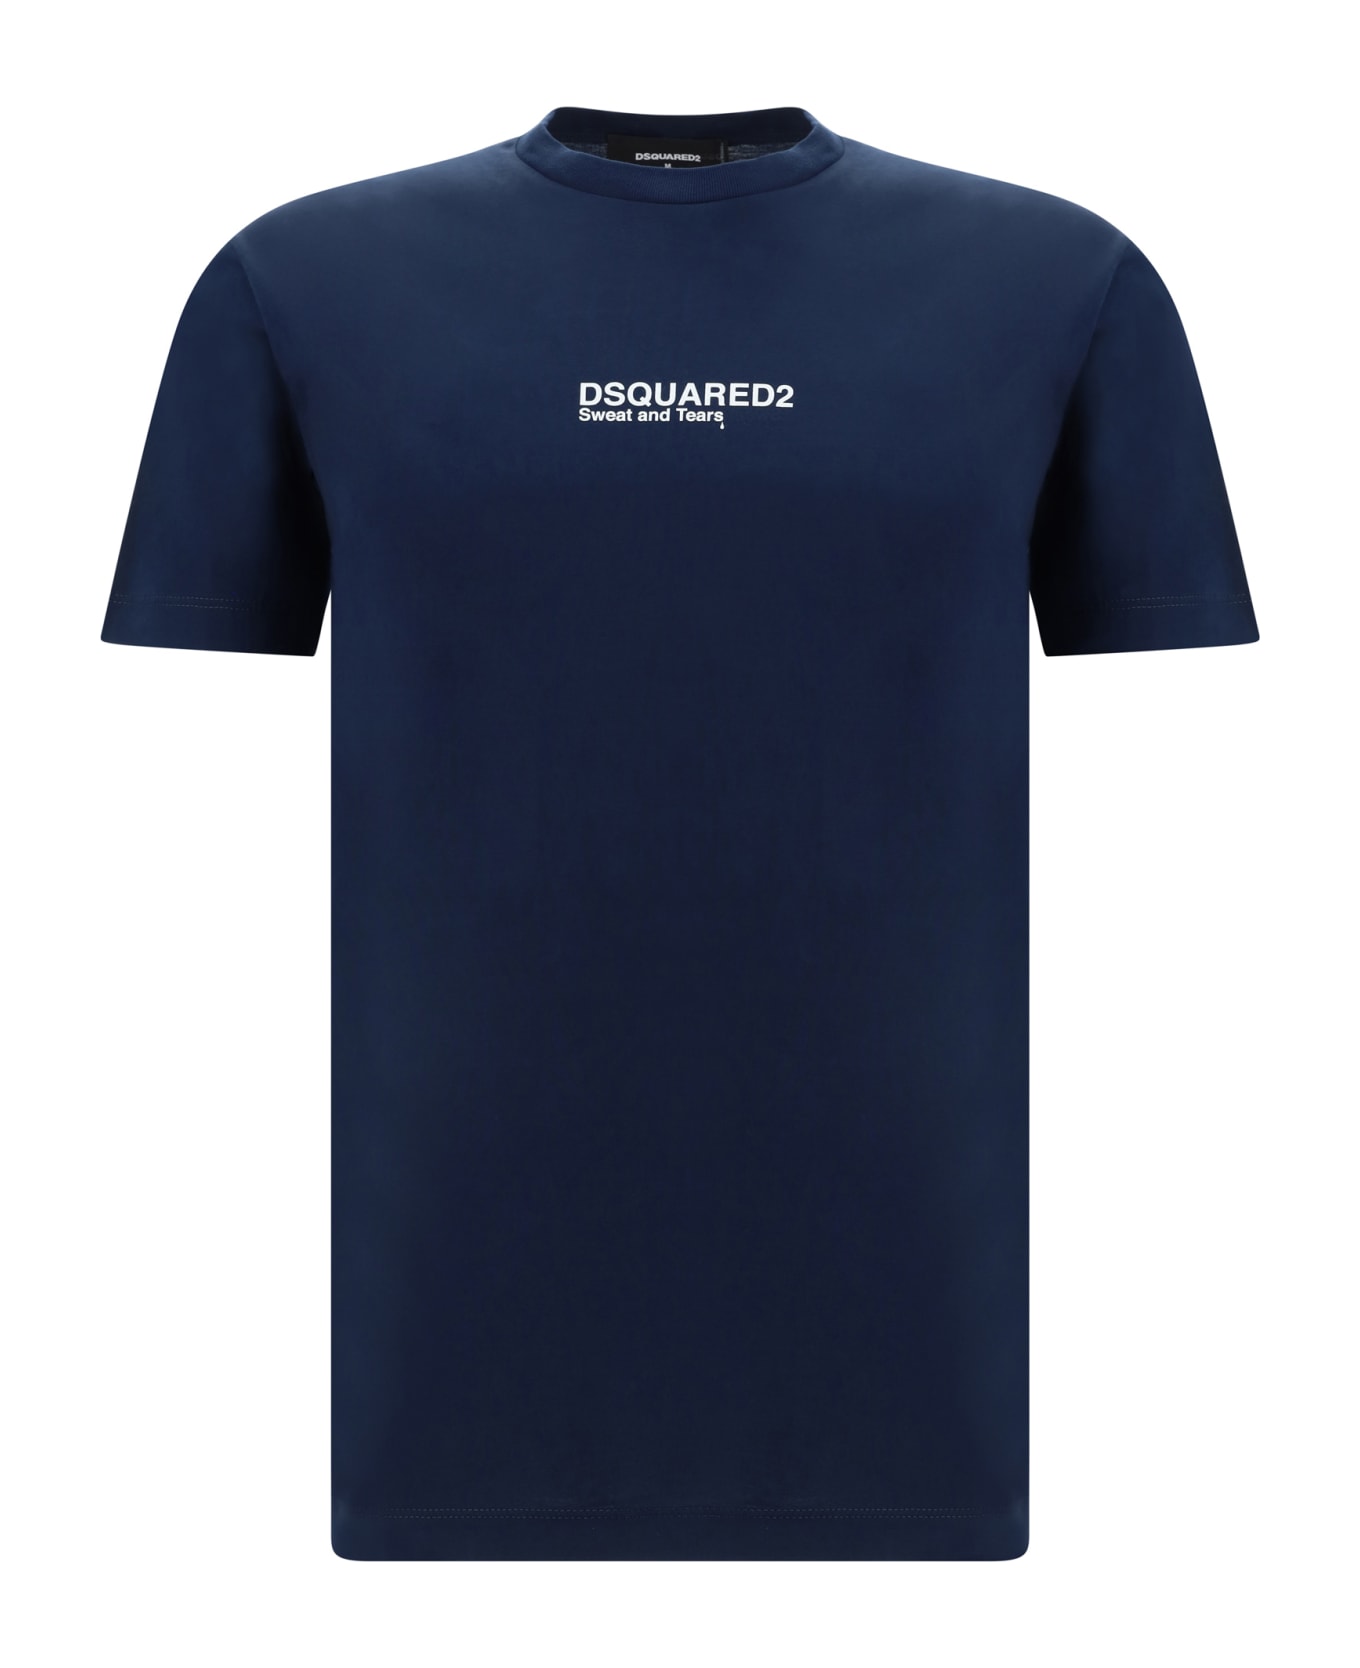 Dsquared2 T-shirt - 478 シャツ